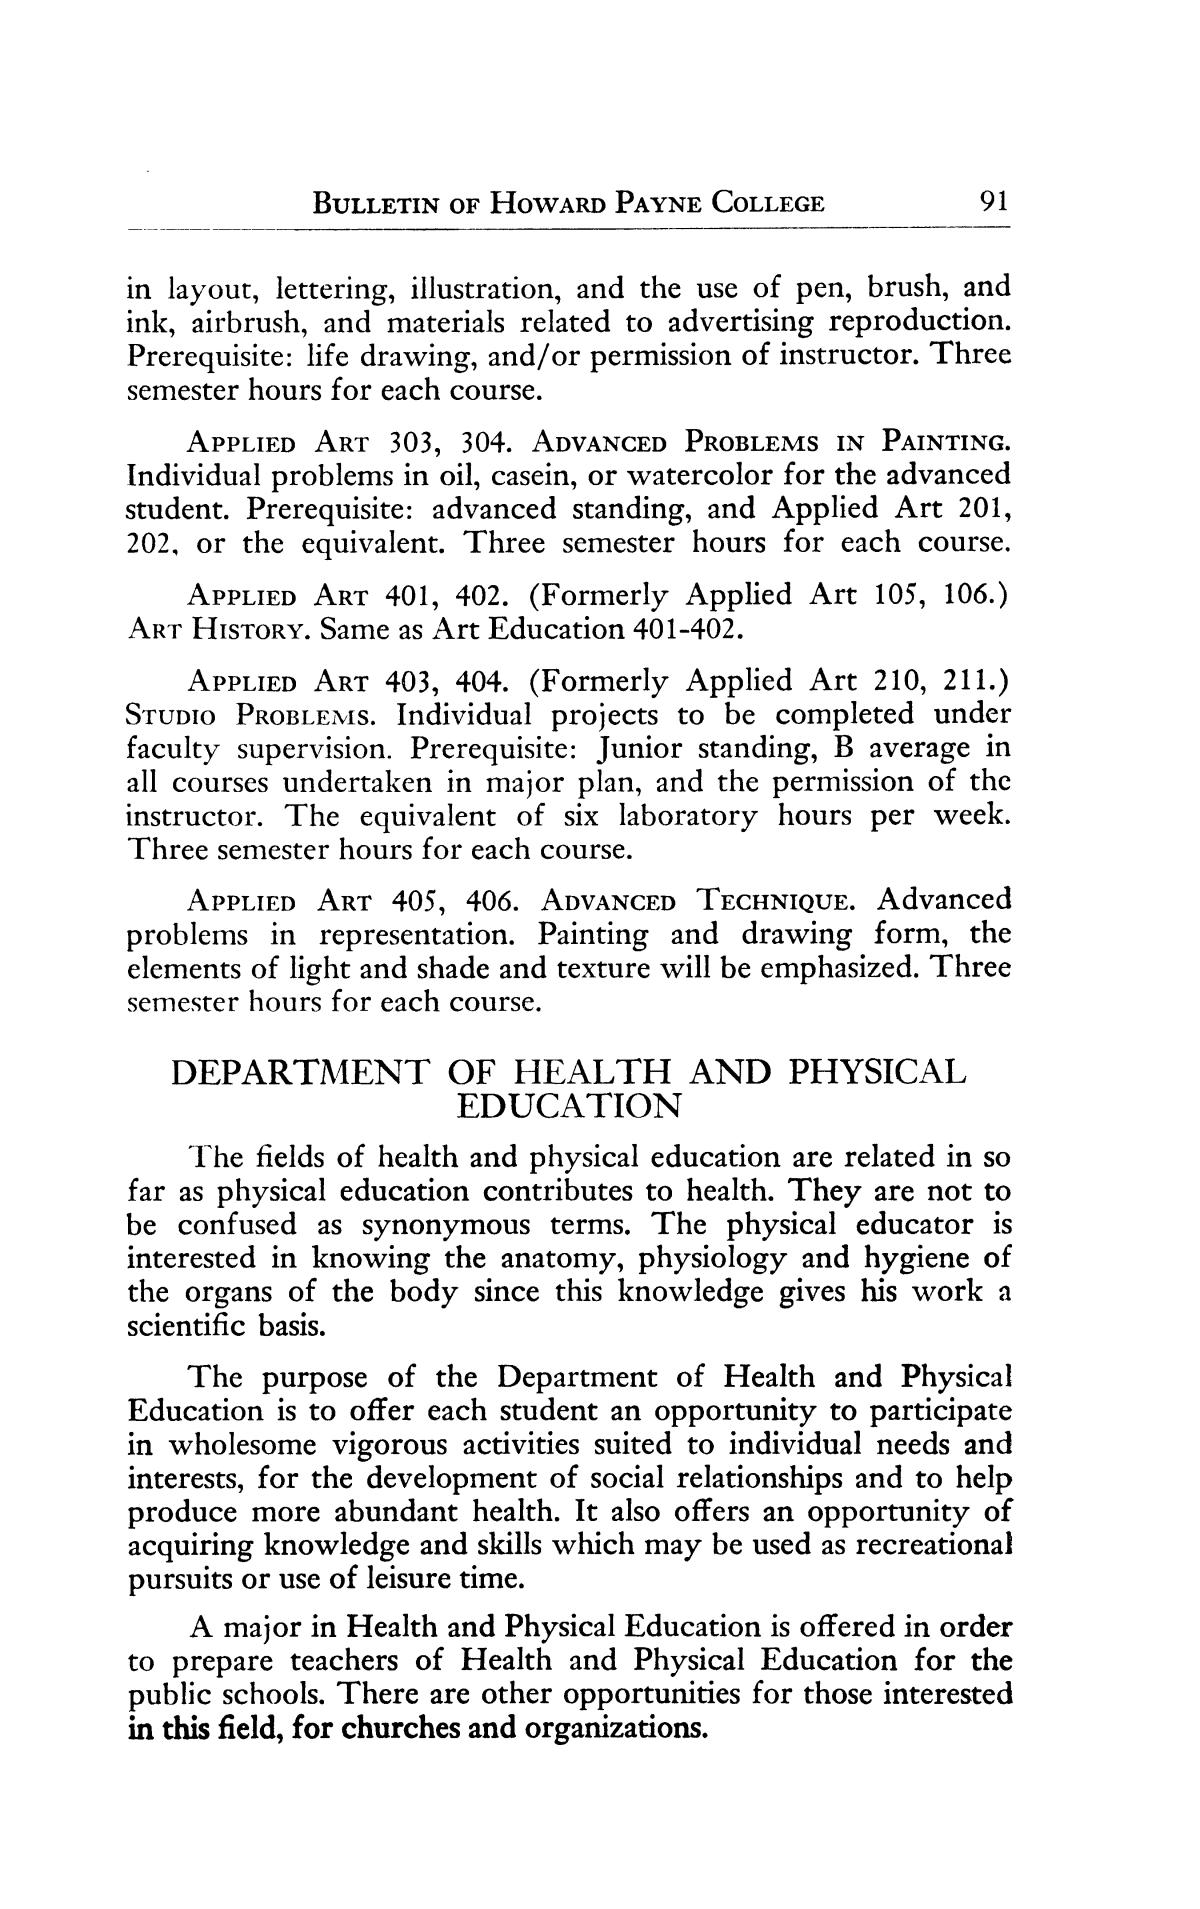 Catalog of Howard Payne College, 1954-1955
                                                
                                                    91
                                                